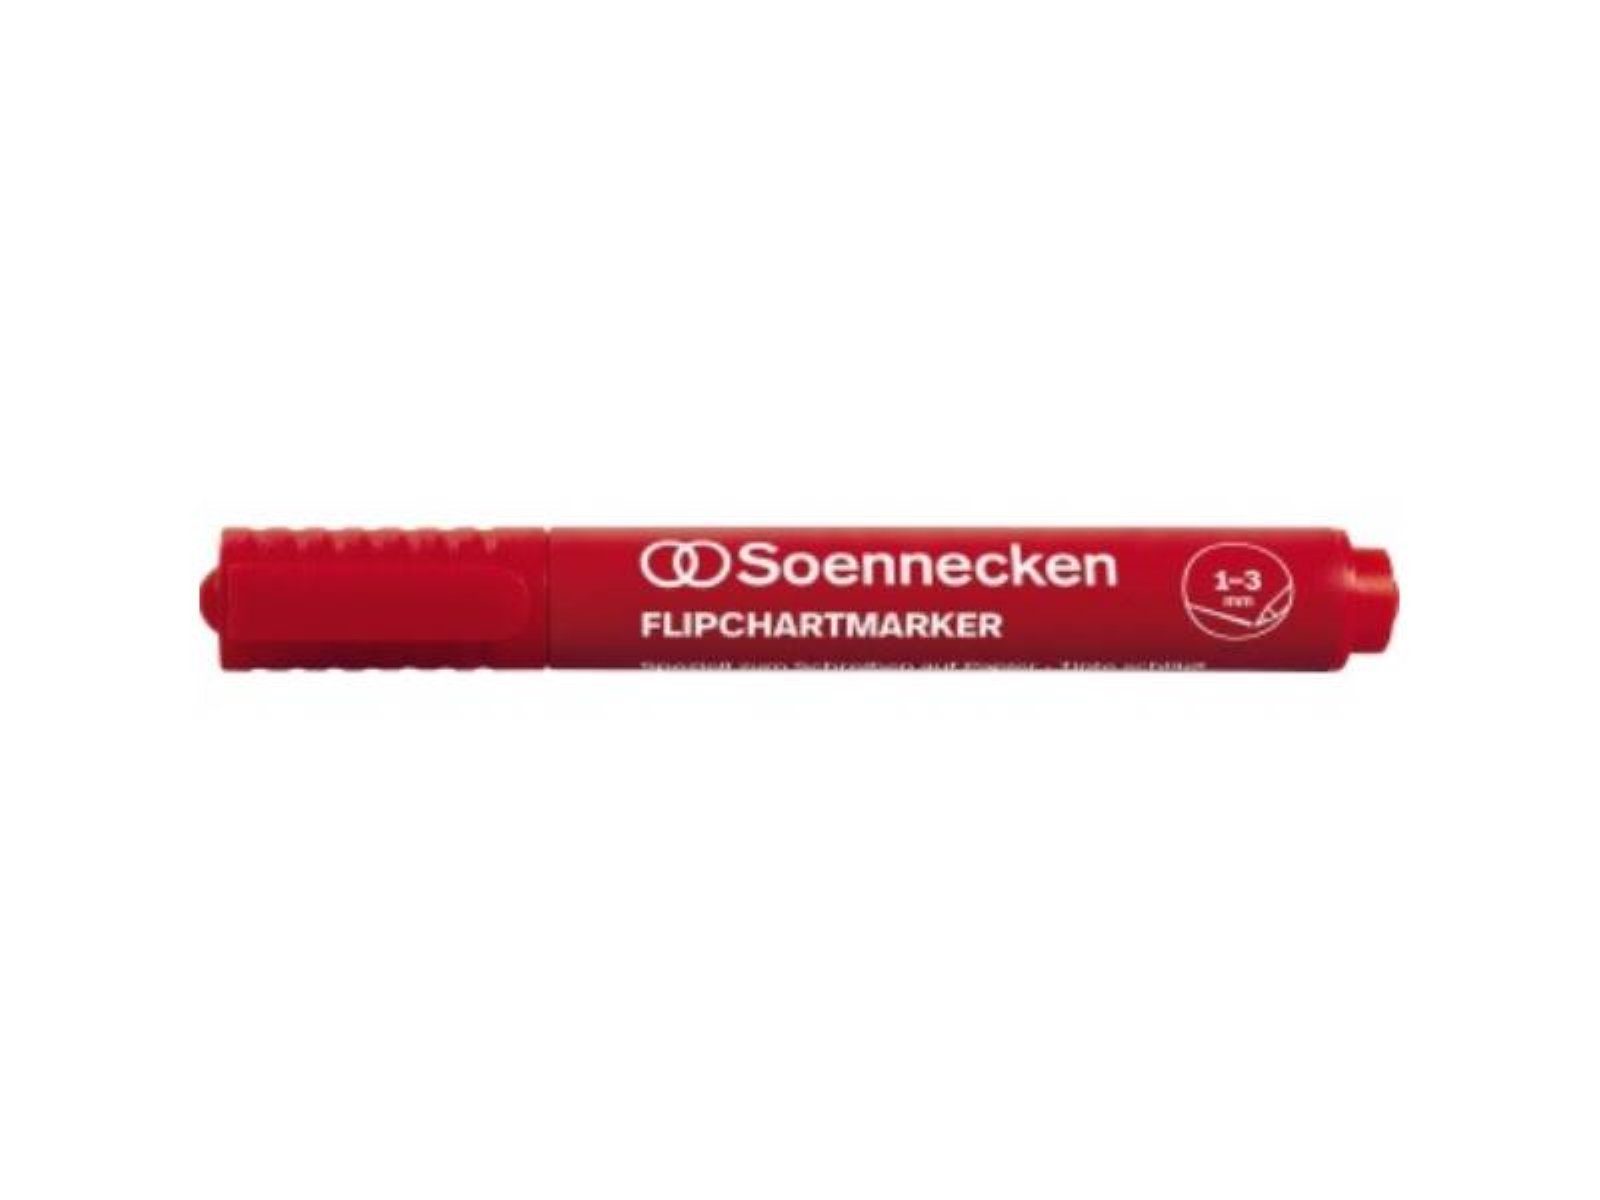 Soennecken Marker SOENNECKEN 3075 Soennecken Flipchartmarker 1-3mm rot Soennecken Fli